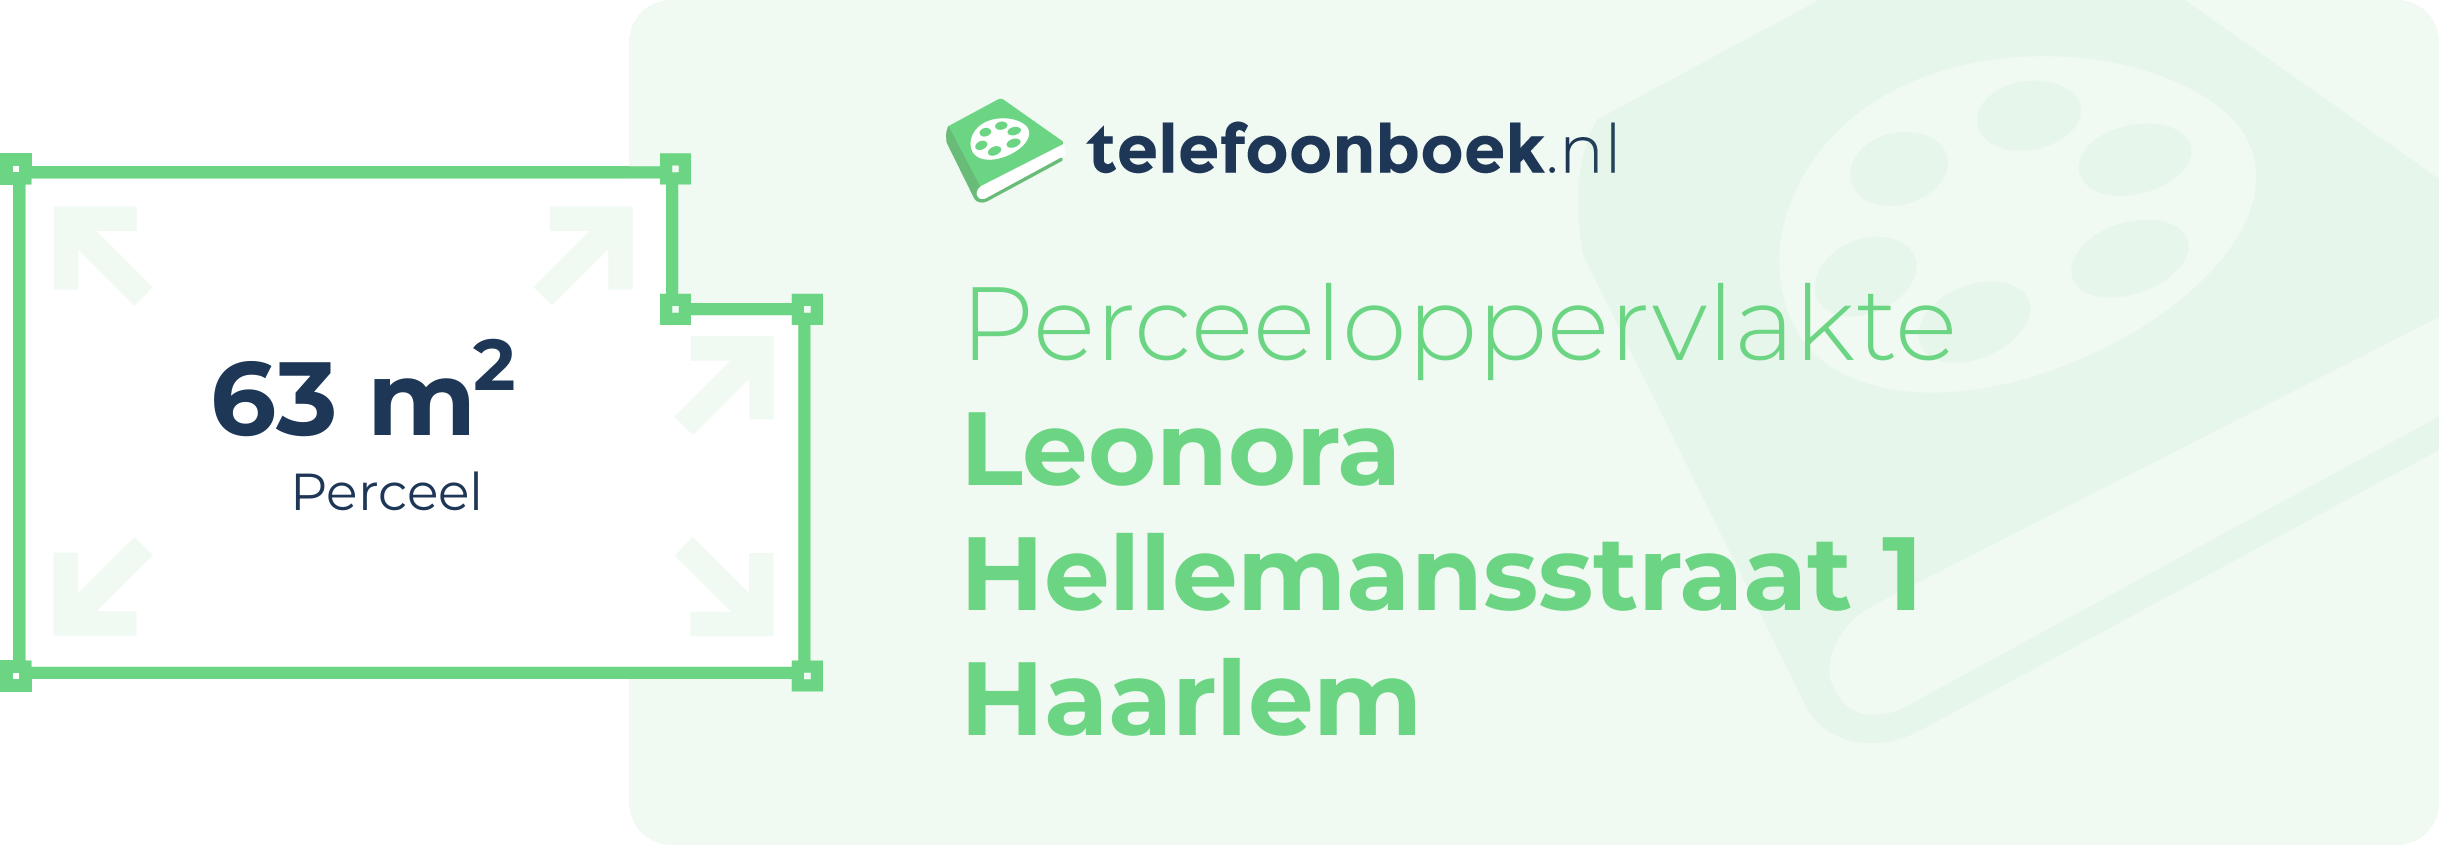 Perceeloppervlakte Leonora Hellemansstraat 1 Haarlem